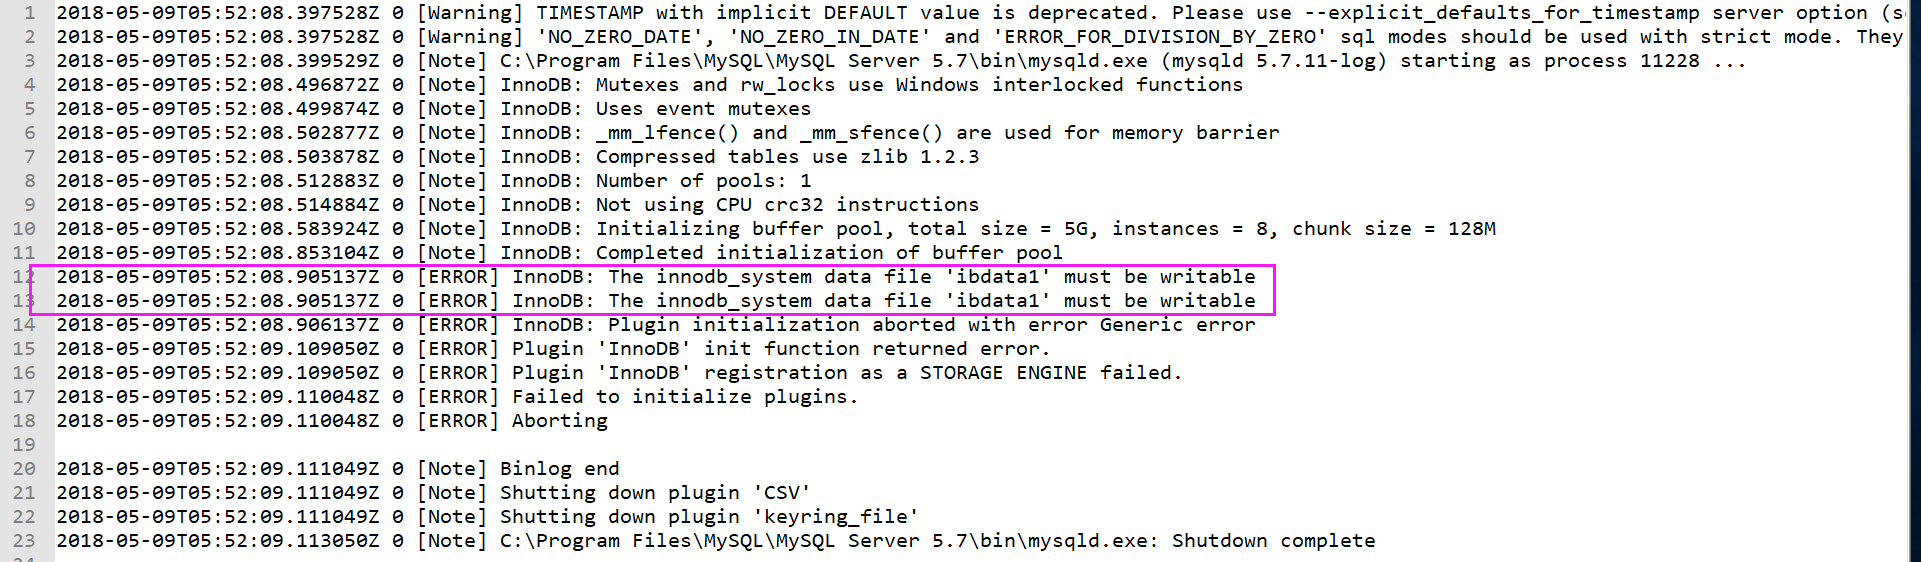 mysql5.7服务器The innodb_system data file 'ibdata1' must be writable导致无法启动服务器第1张